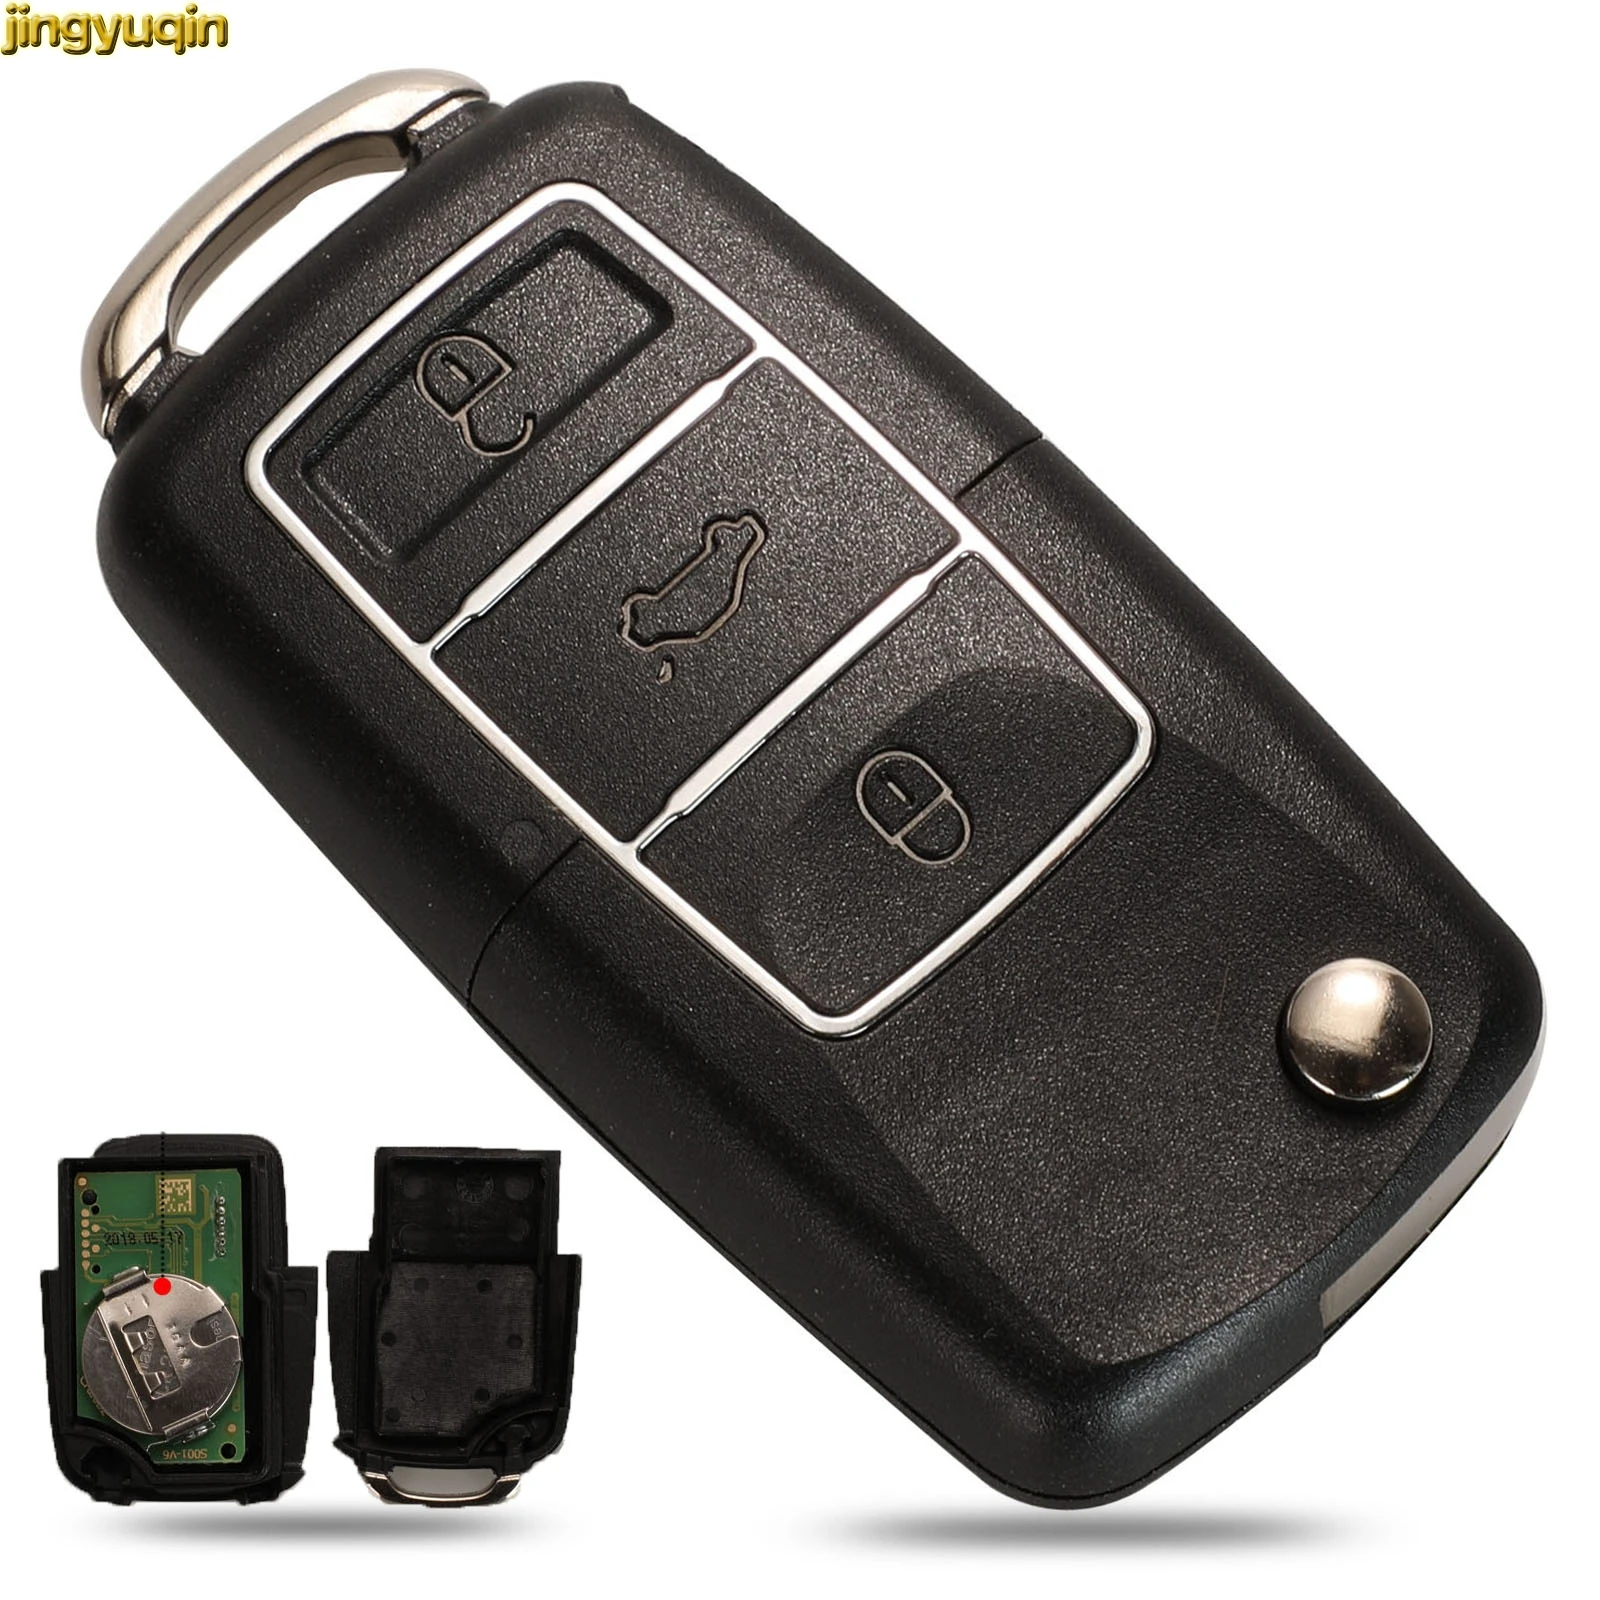 

Jingyuqin 10pcs Flip Remote Car Key Shell For VW Jetta Golf Passat B5 B6 Beetle Polo Bora Caddy MK5 Skoda 3BTN No Battery Holder